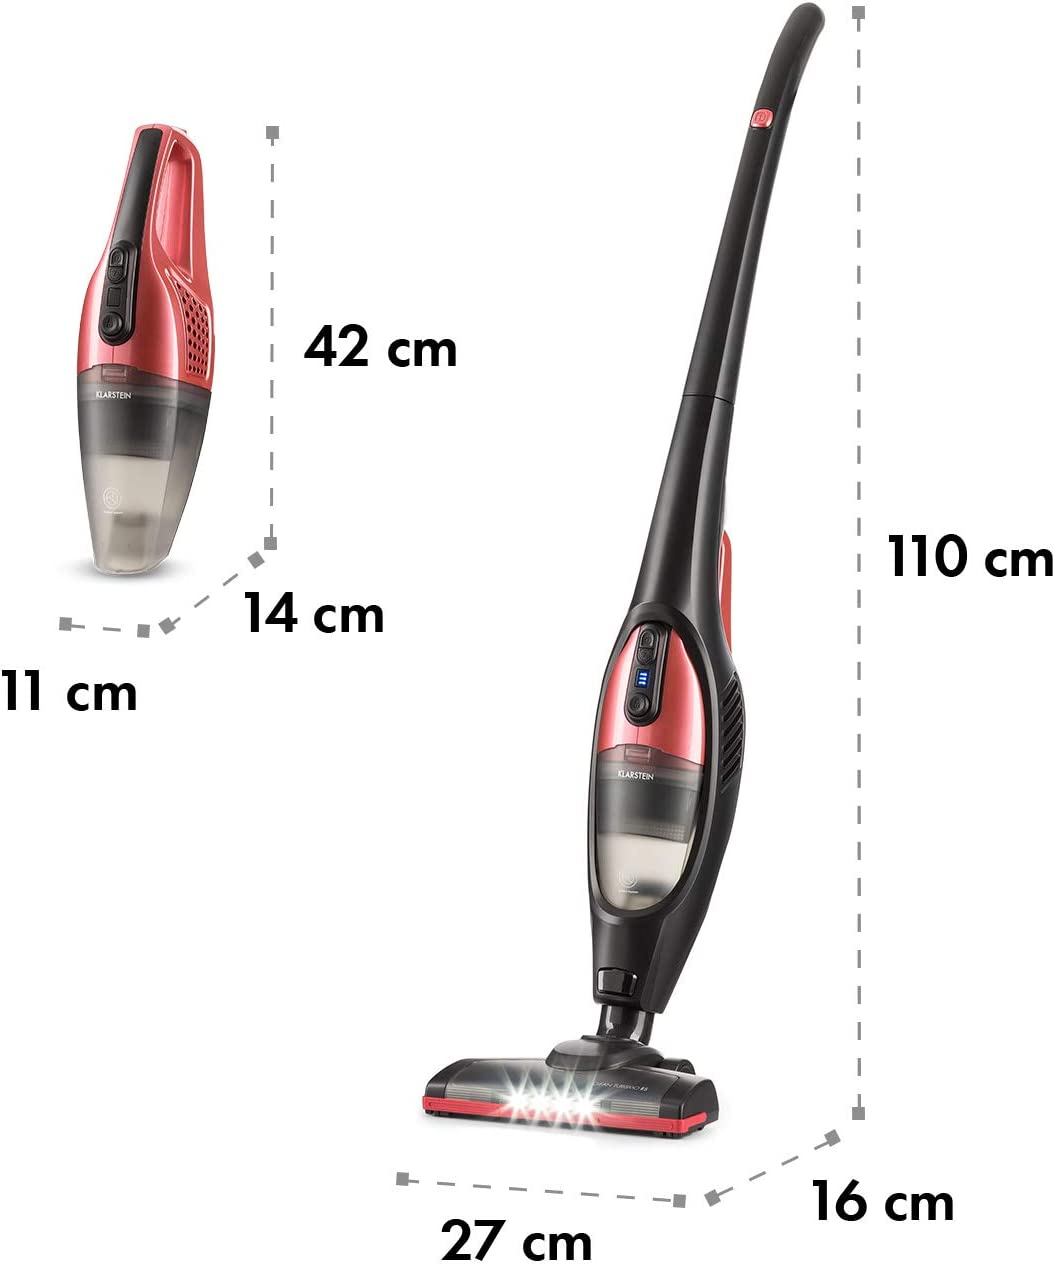 49199 - Klarstein Clean Turismo 2-in-1 Cordless Vacuum Cleaner USA